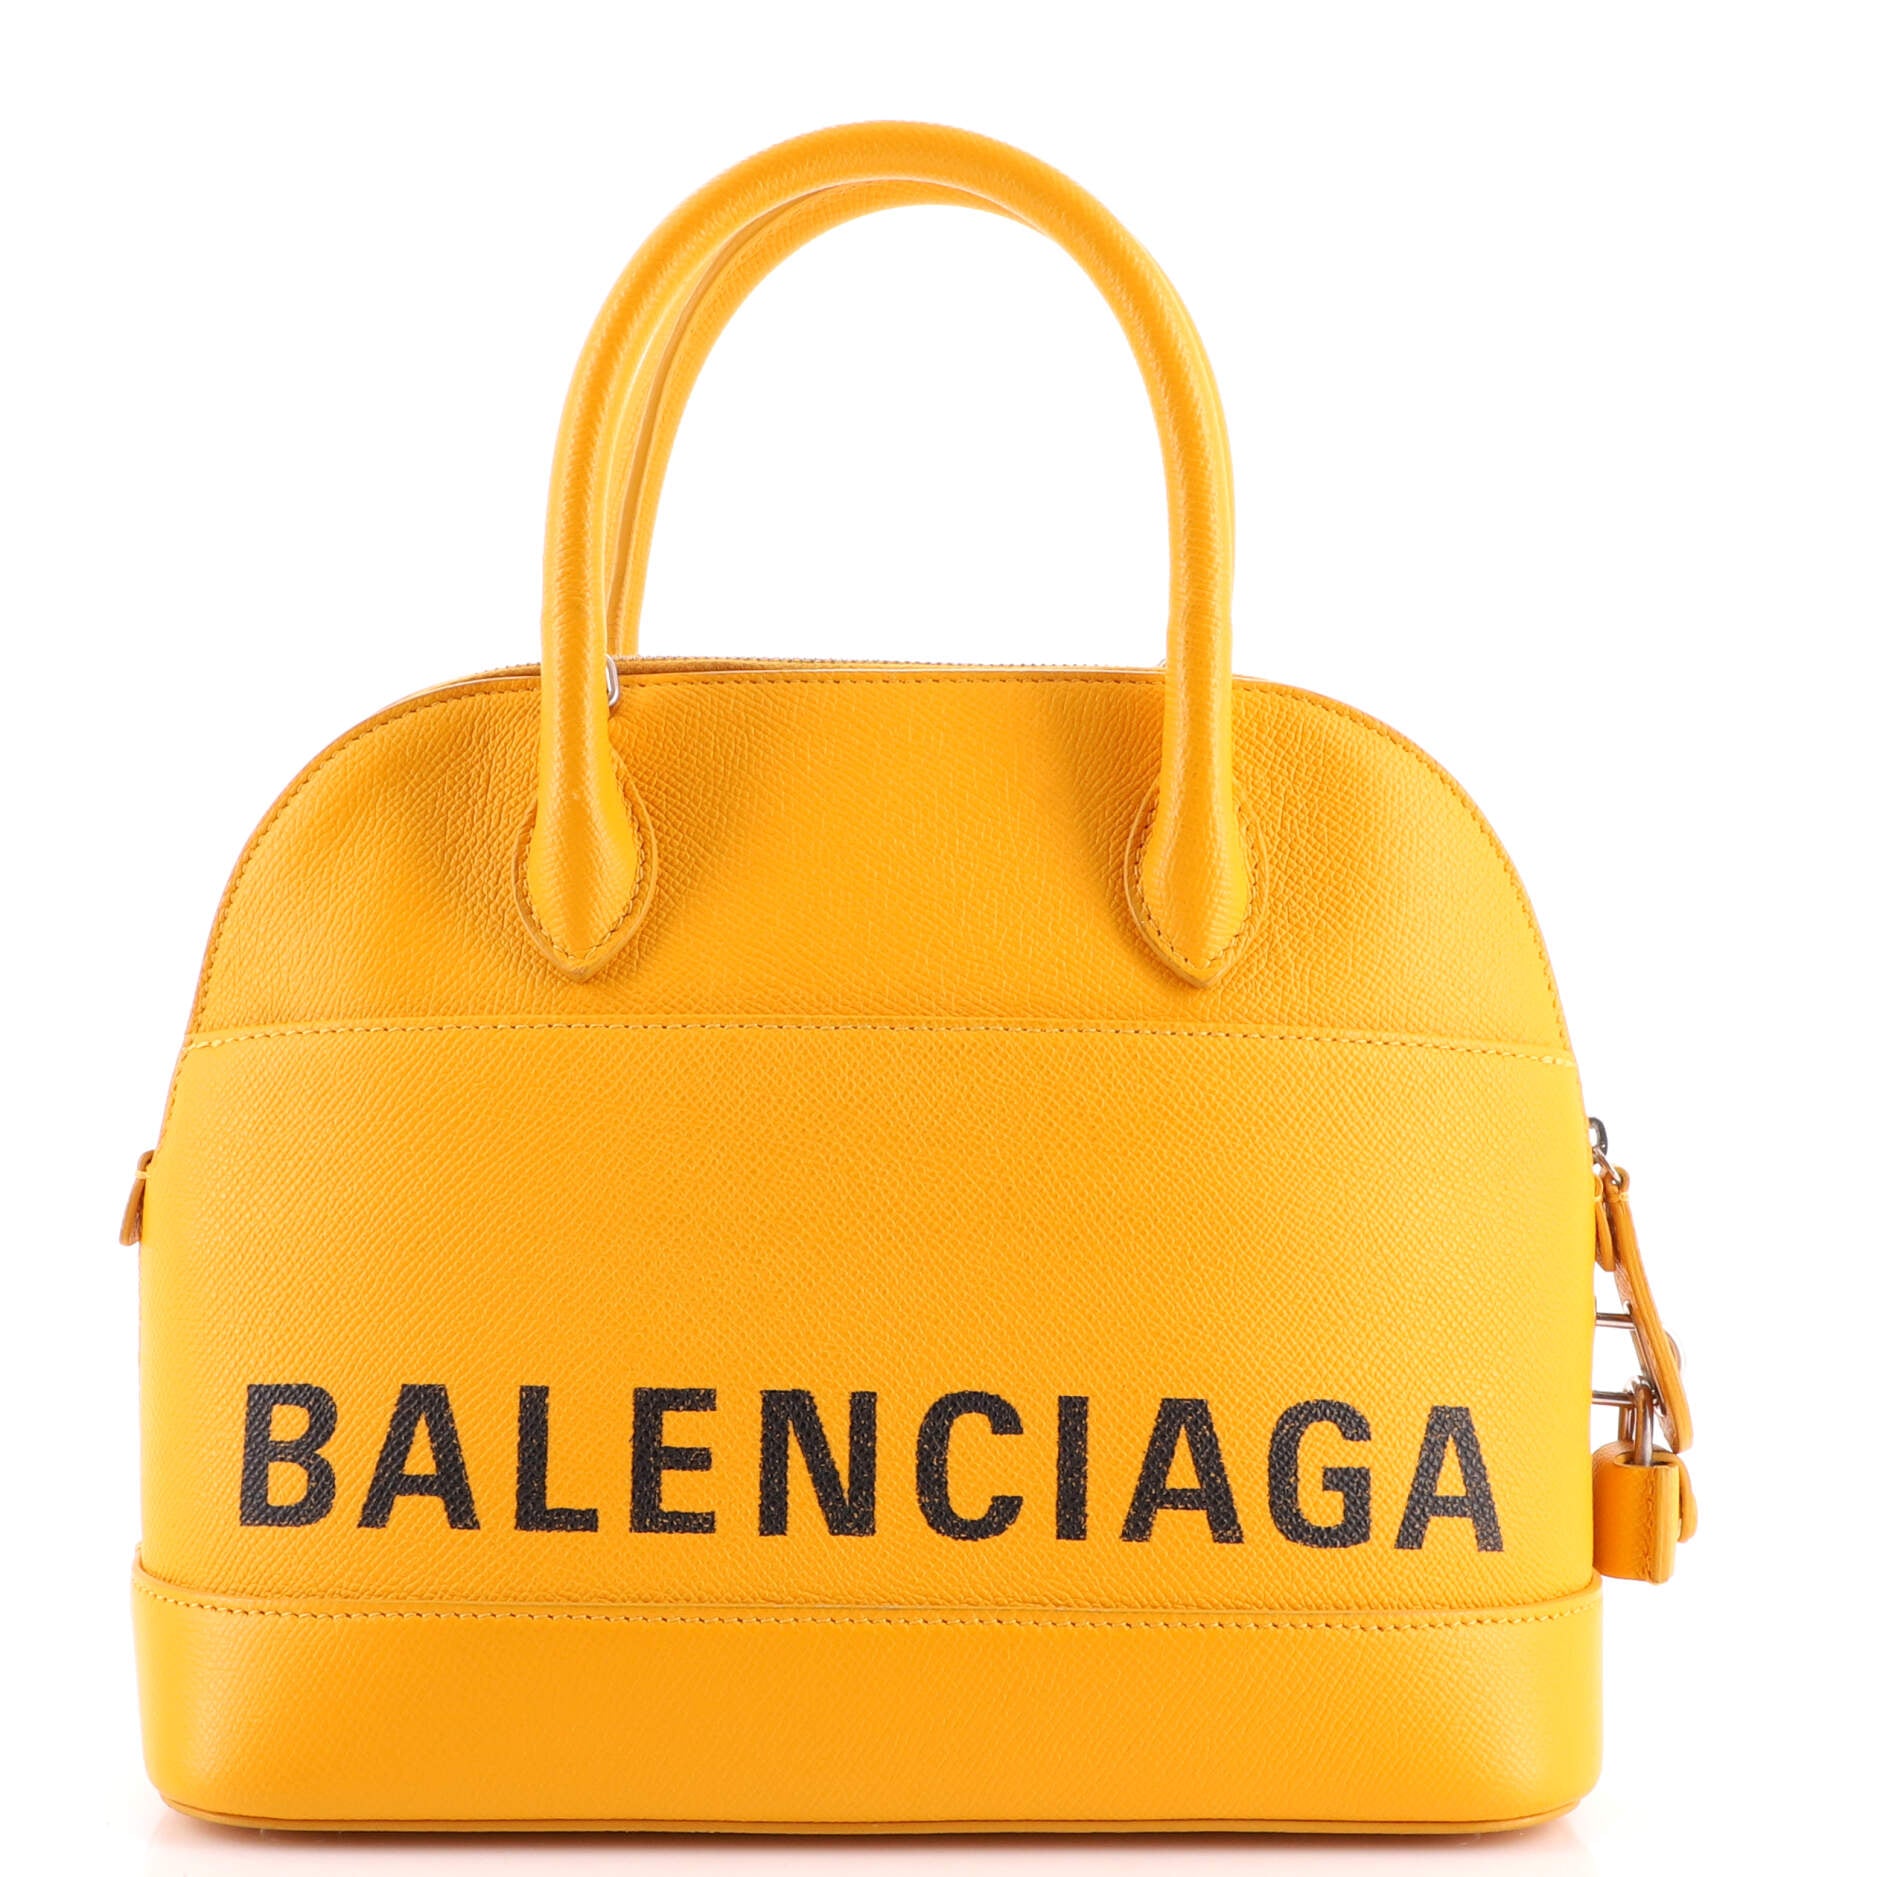 BALENCIAGA: Hourglass S crocodile print leather bag - Yellow Cream